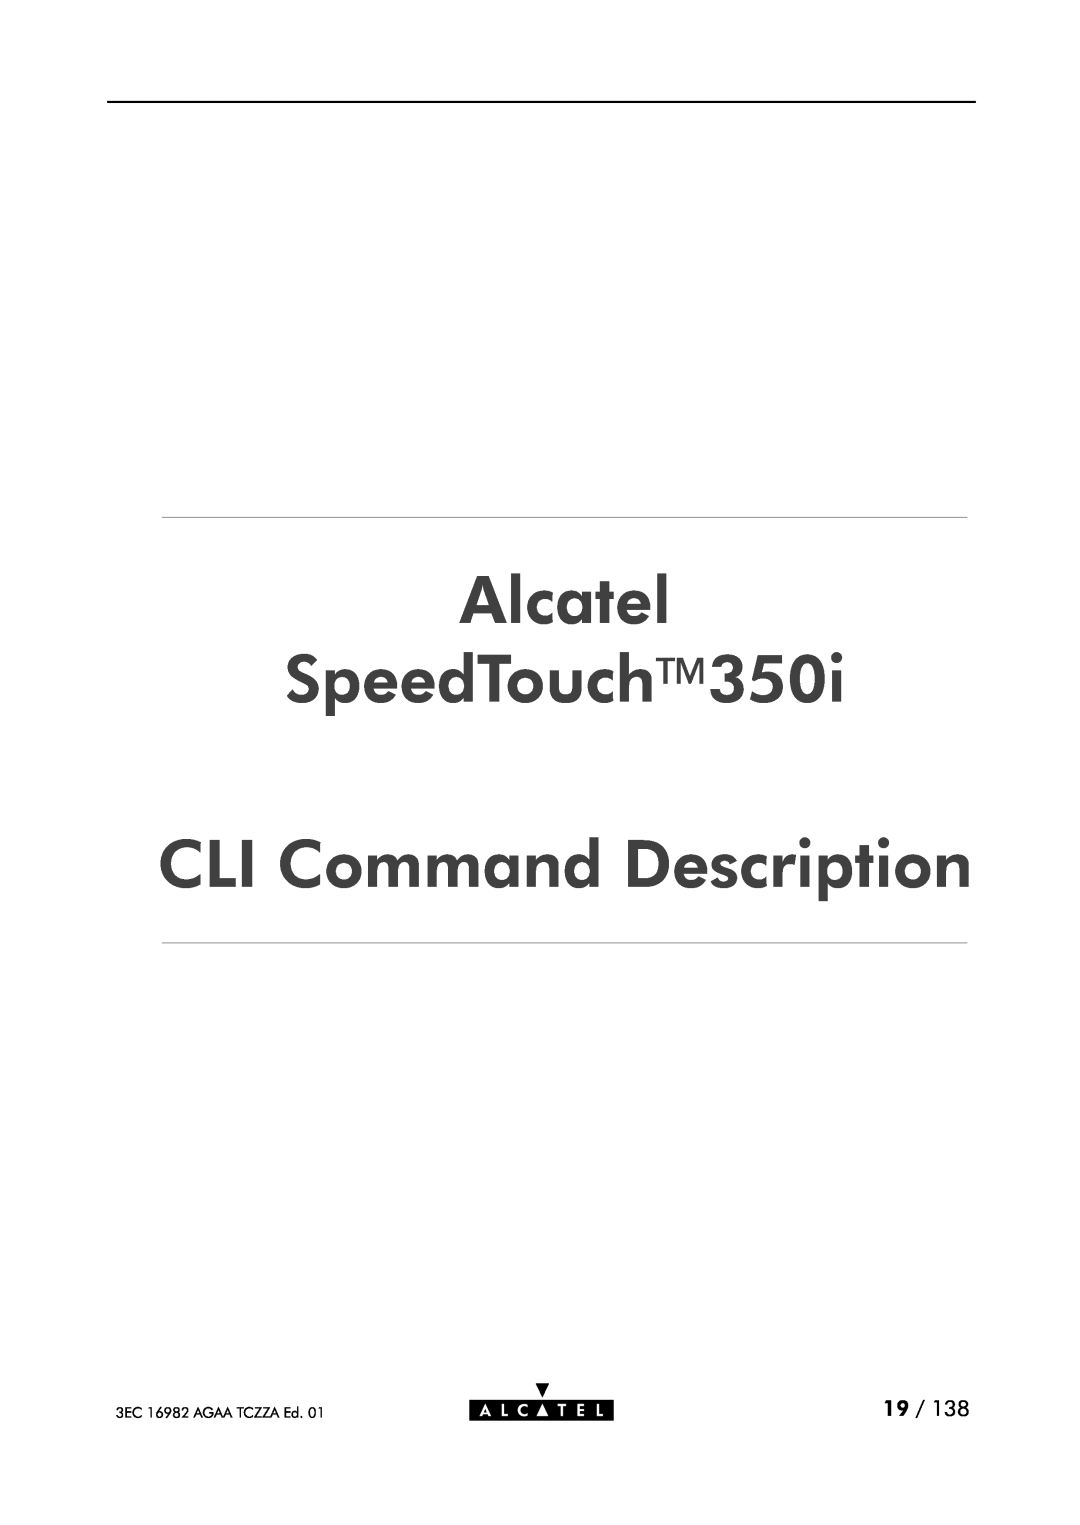 Alcatel Carrier Internetworking Solutions 350I manual Alcatel SpeedTouch CLI Command Description, 3EC 16982 AGAA TCZZA Ed 